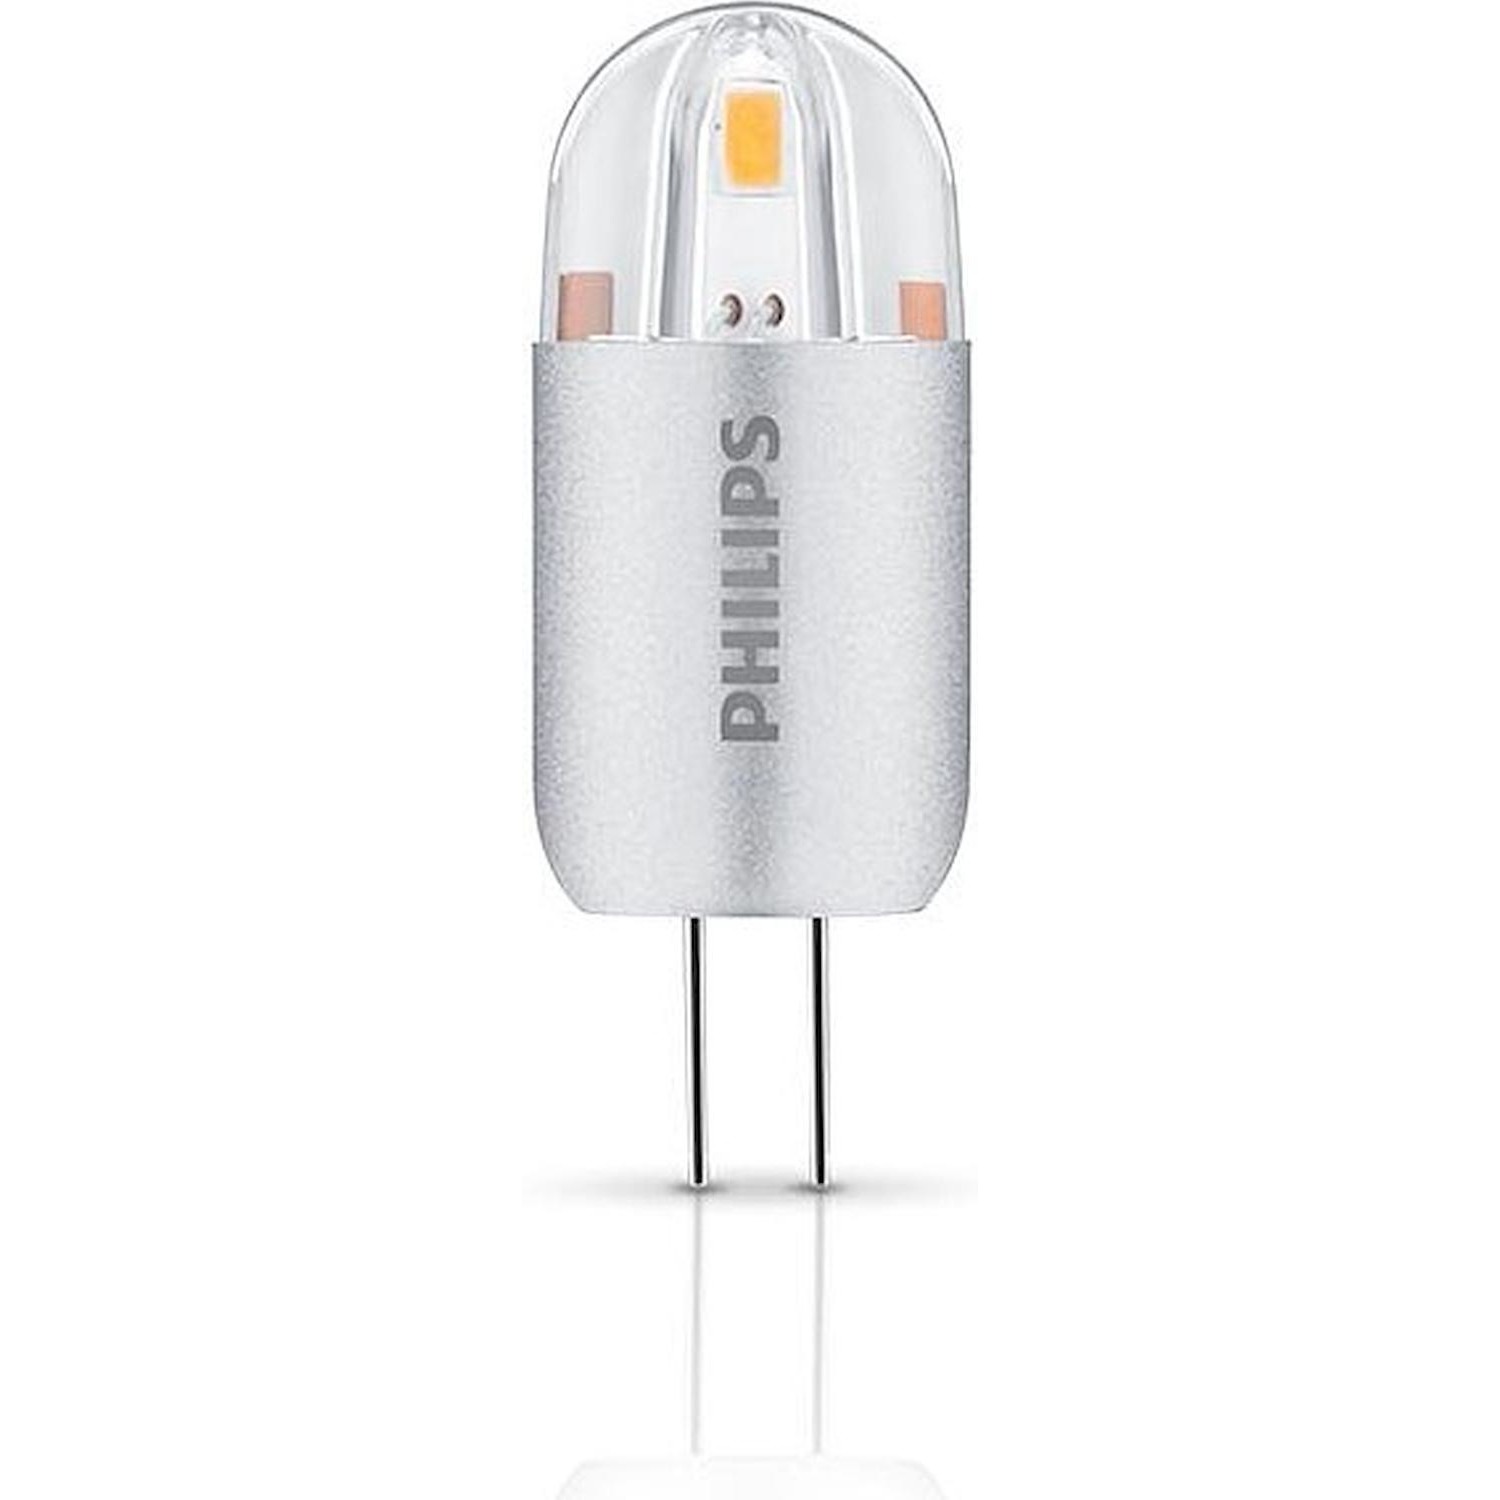 Immagine per Lampadina Philips LED Capsule G4 10W da DIMOStore